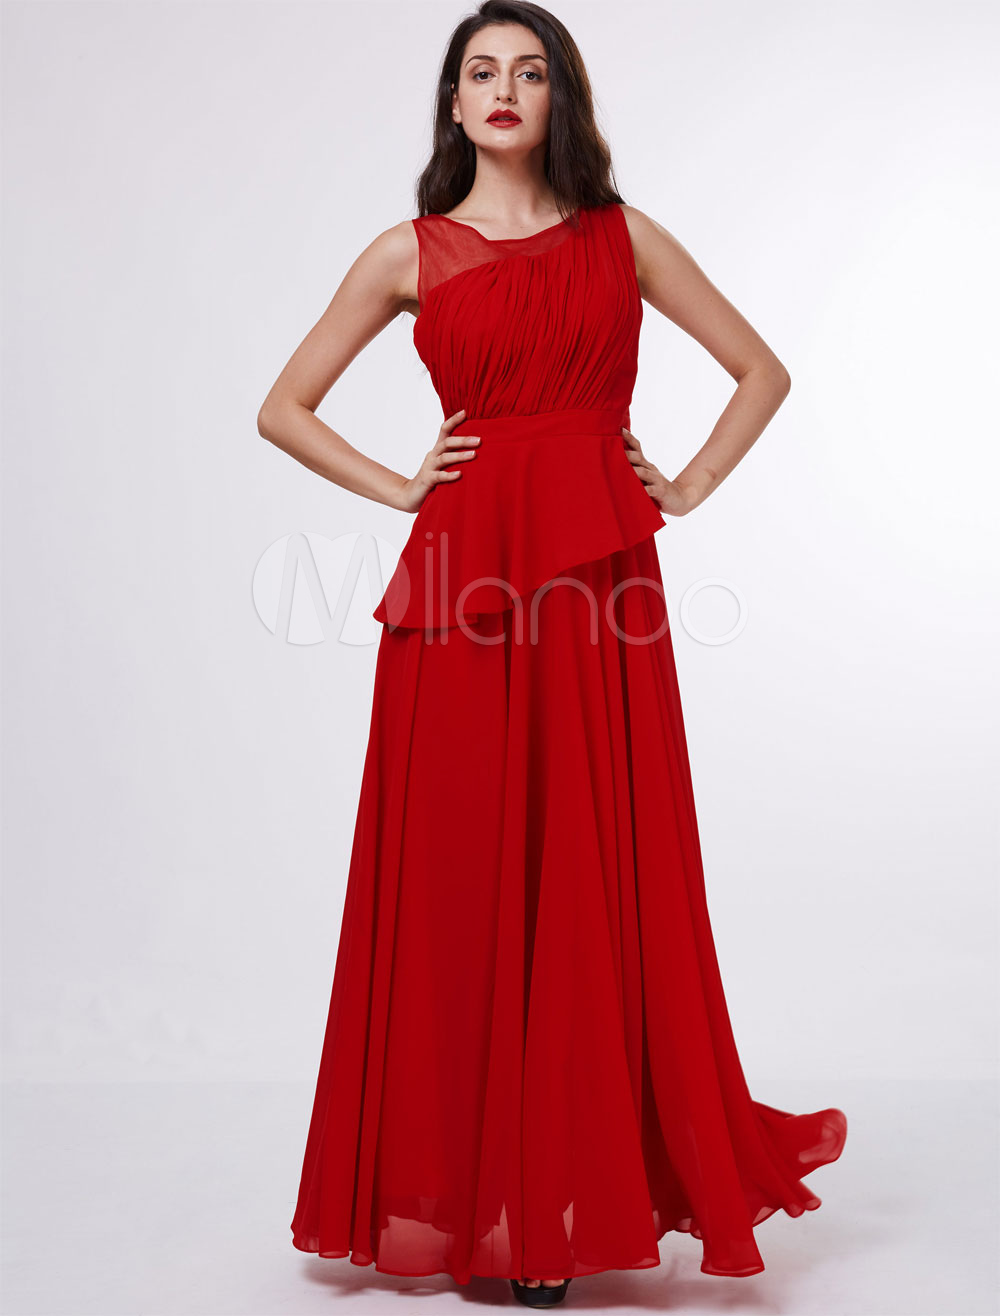 Mother Of The Bride Dresses Red Chiffon Asymmetrical Ruffles Floor Length Wedding Guest Dress photo